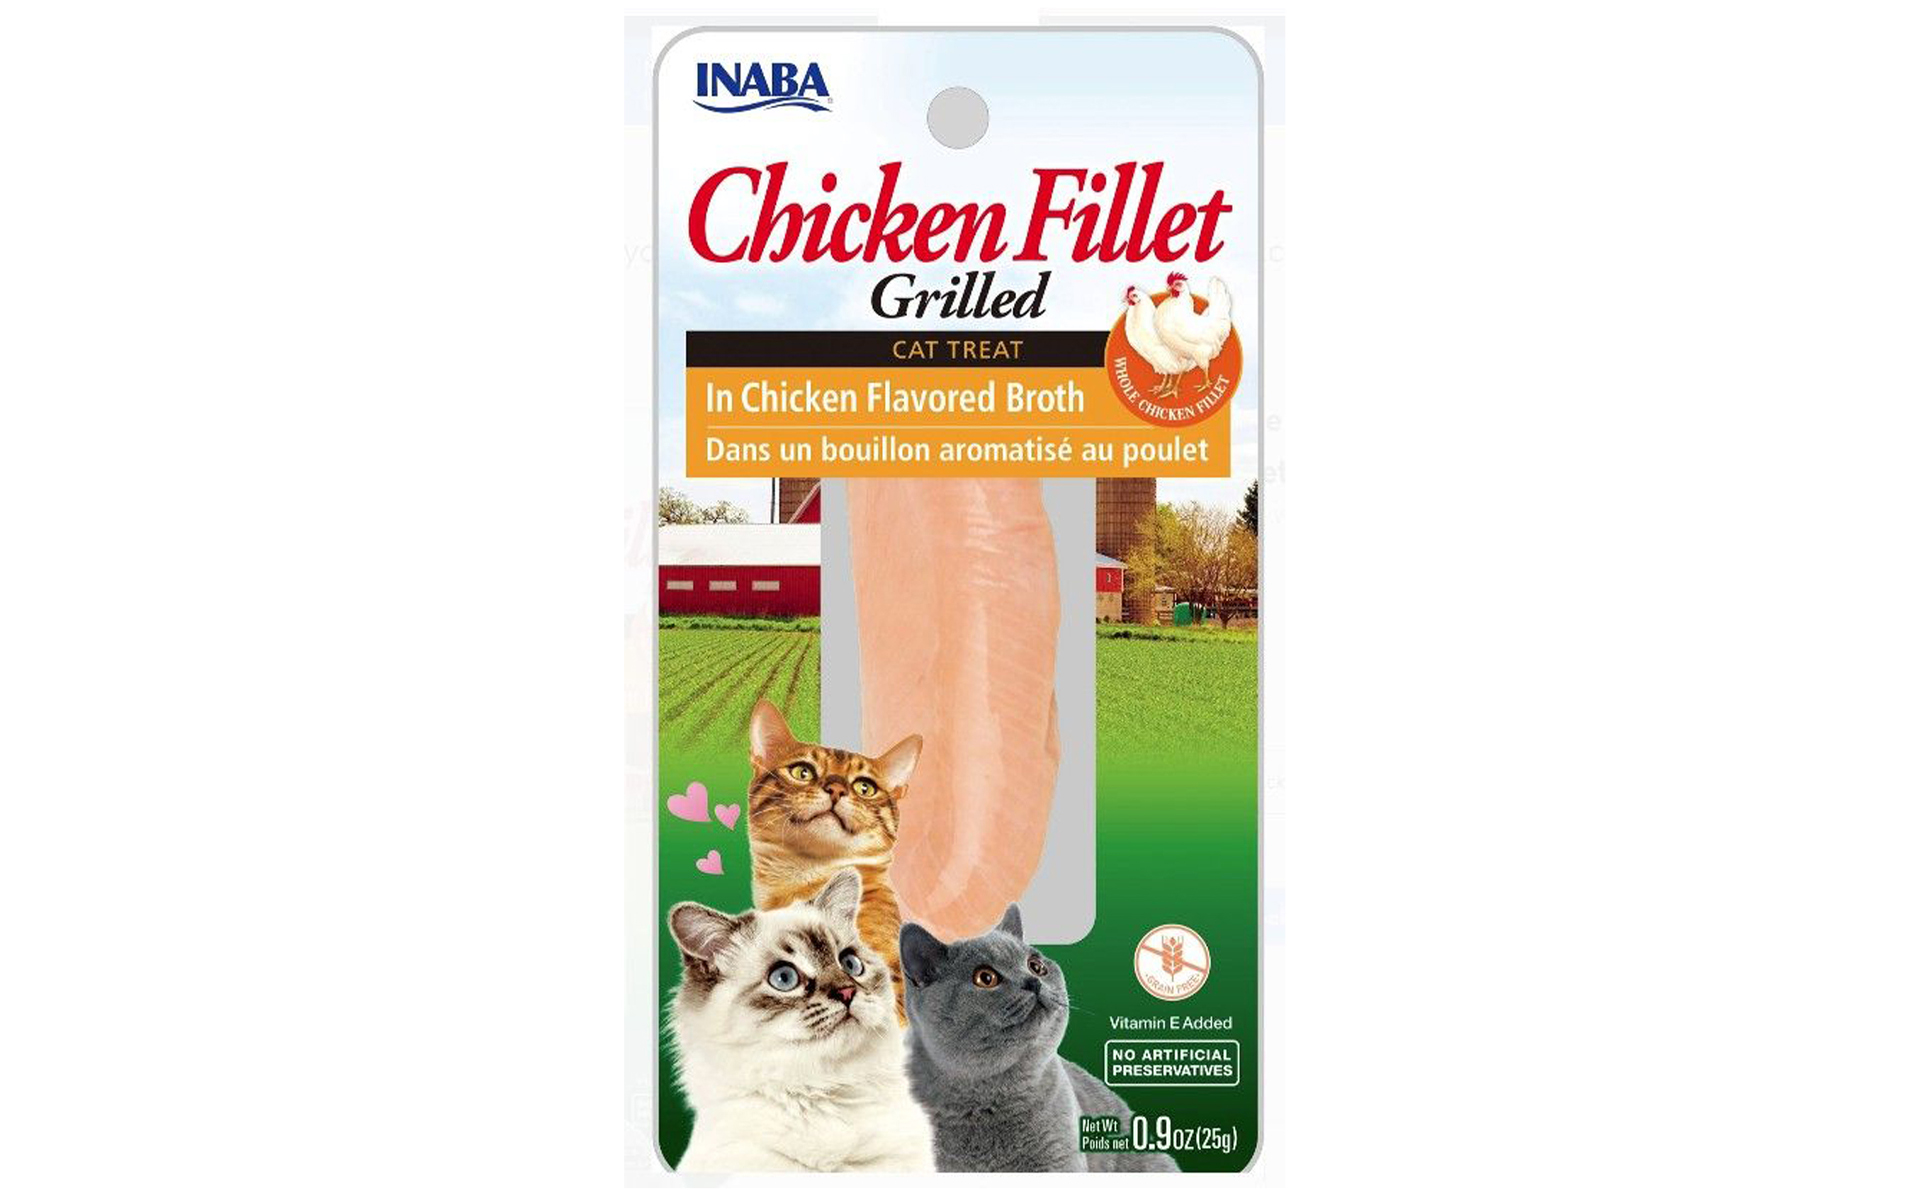 Chicken Fillet Grilled Cat Treat in Chicken Flavored Broth